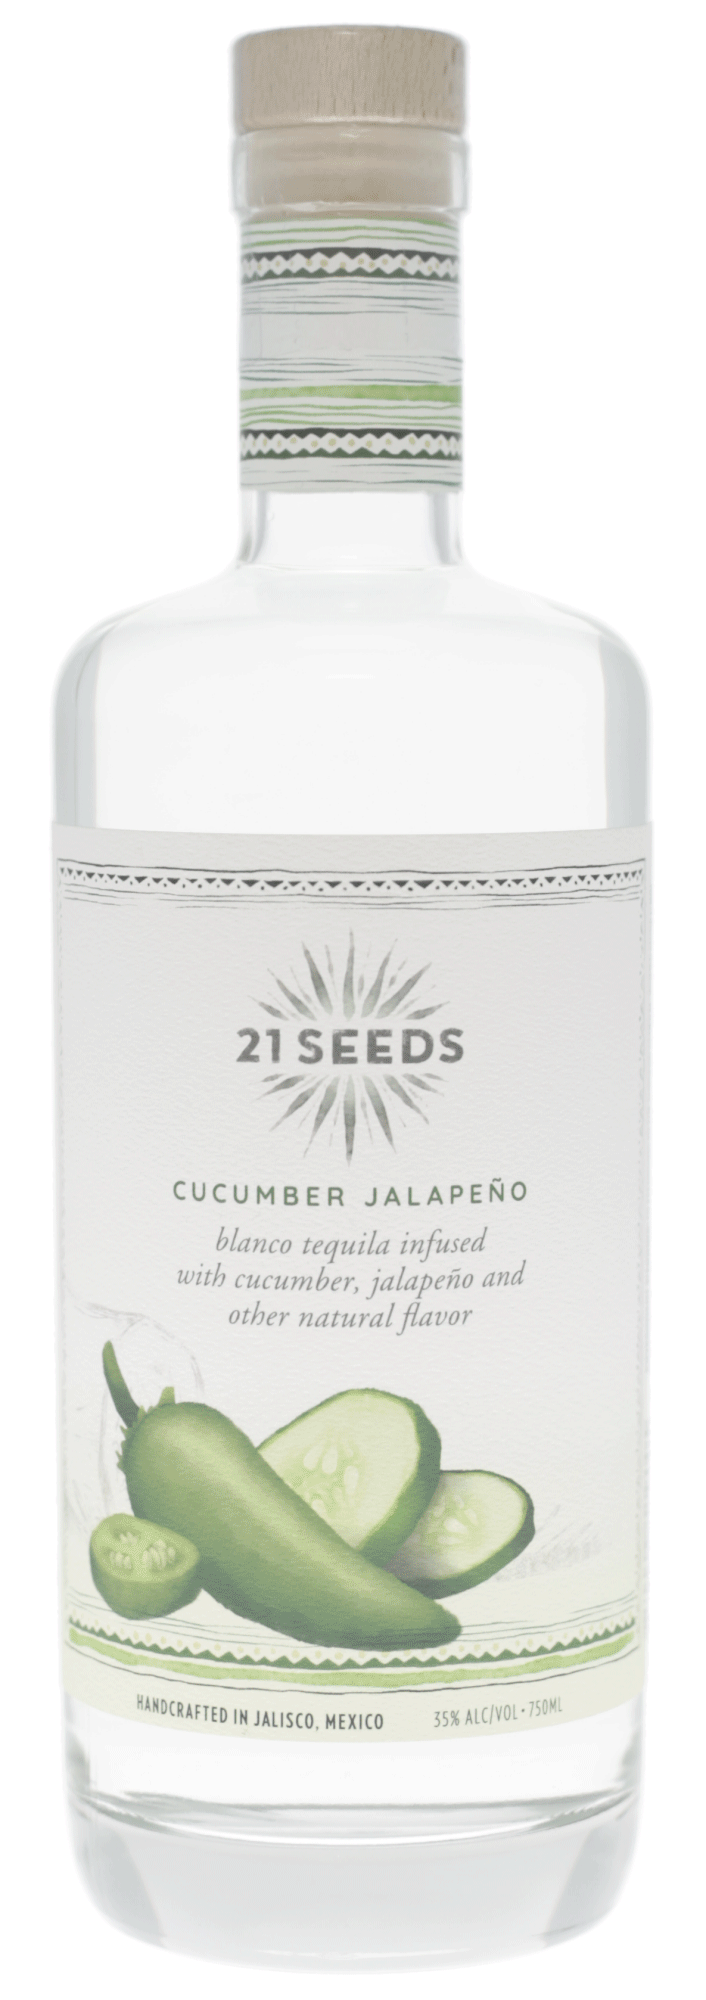 21 Seeds Cucumber Jalapeño Tequila Blanco